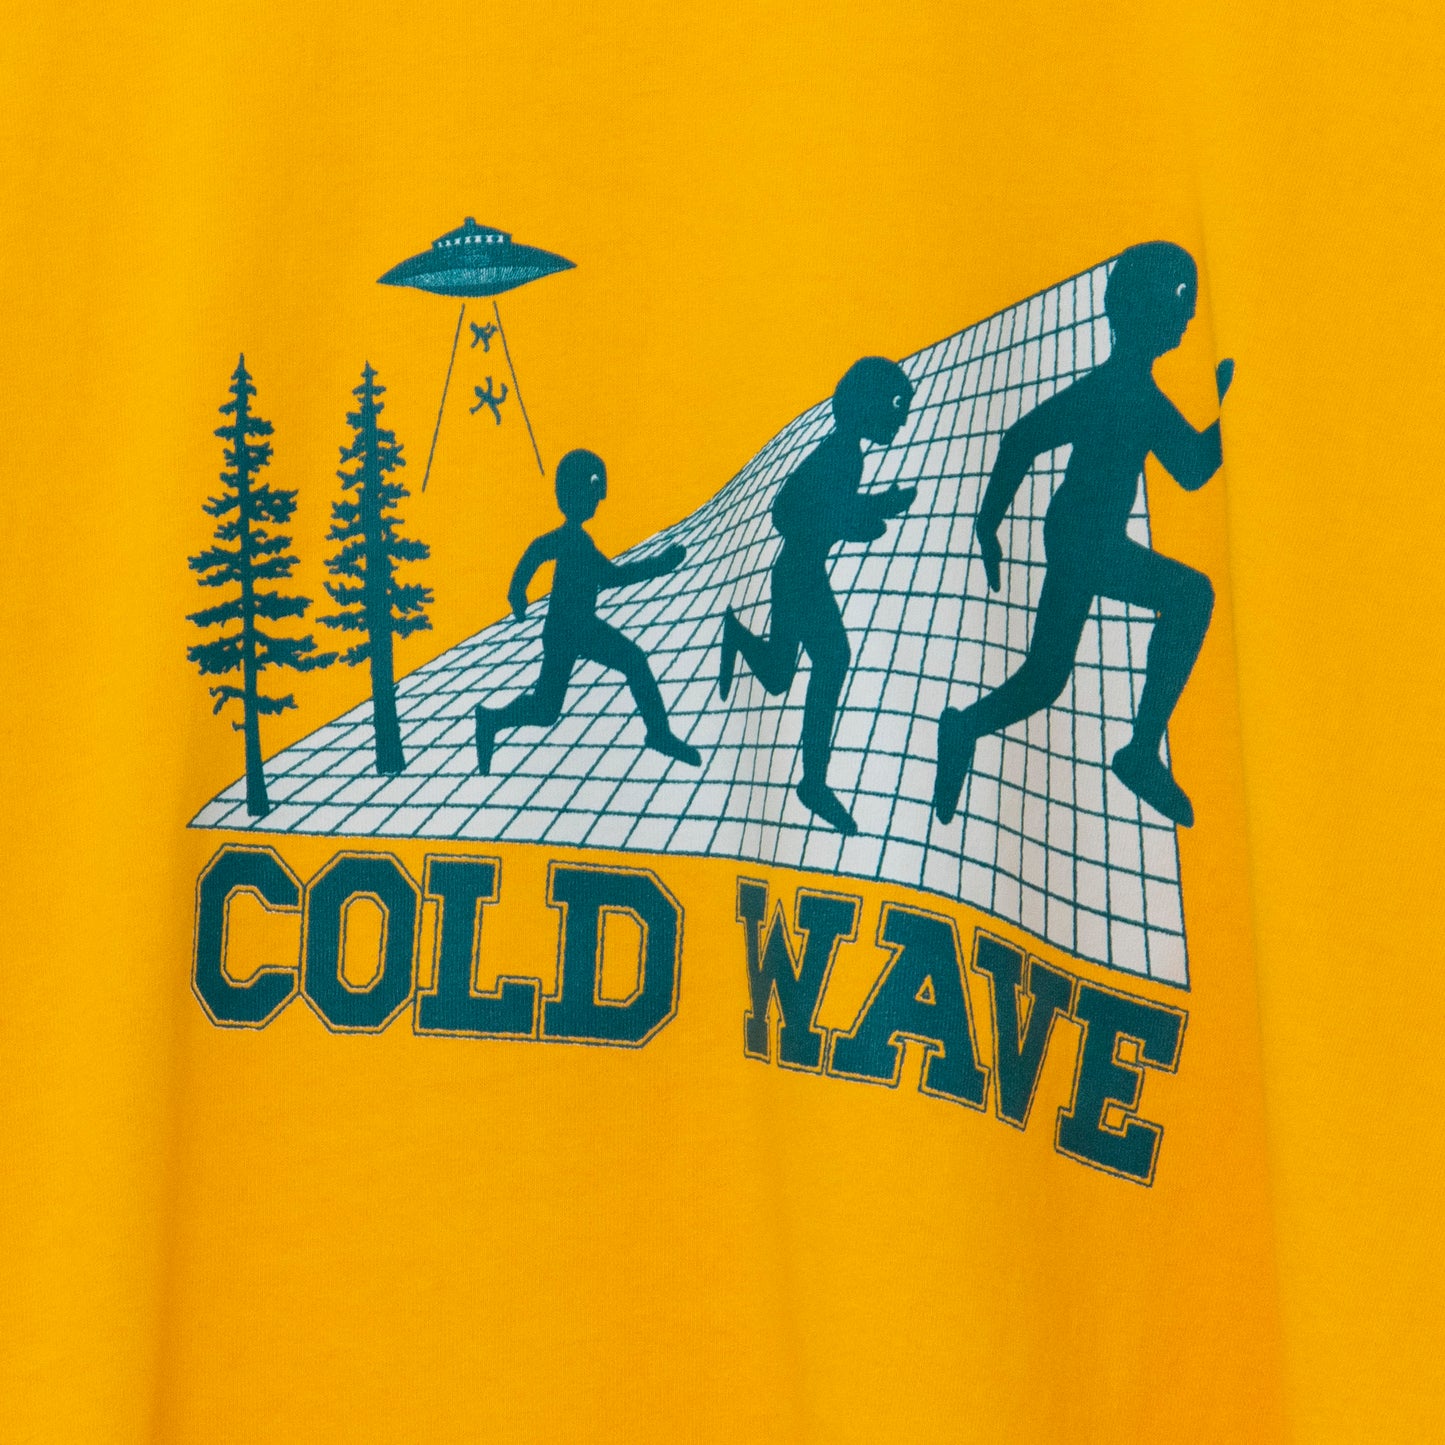 Cold Wave Alien T-Shirt Gold